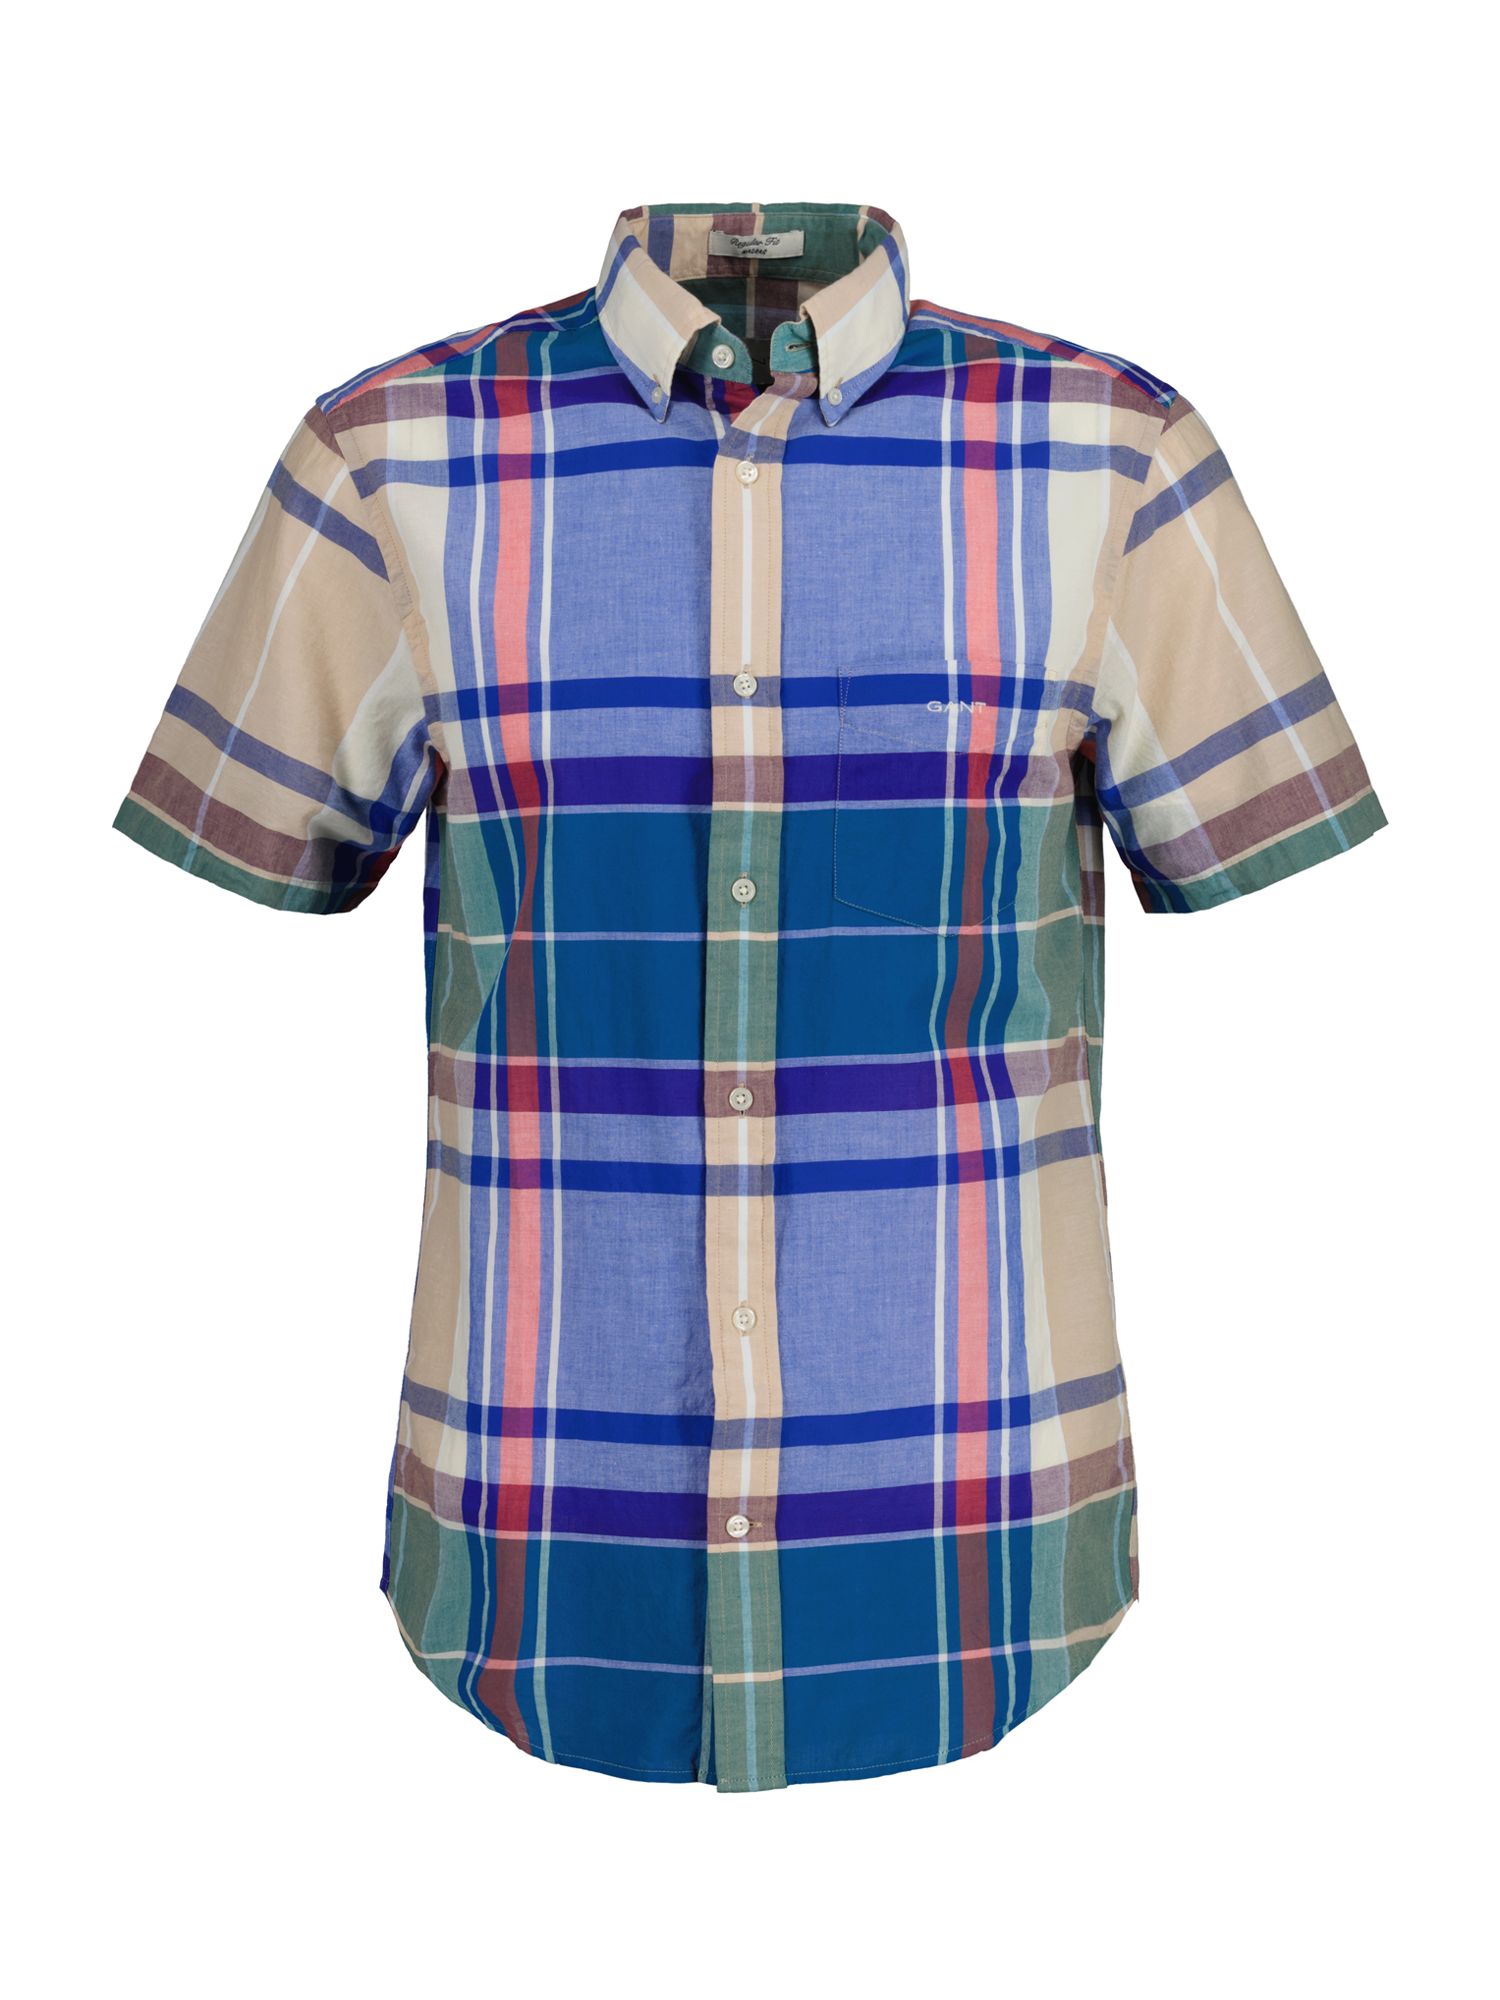 GANT Madras Short Sleeve Shirt, Blue/Multi, M